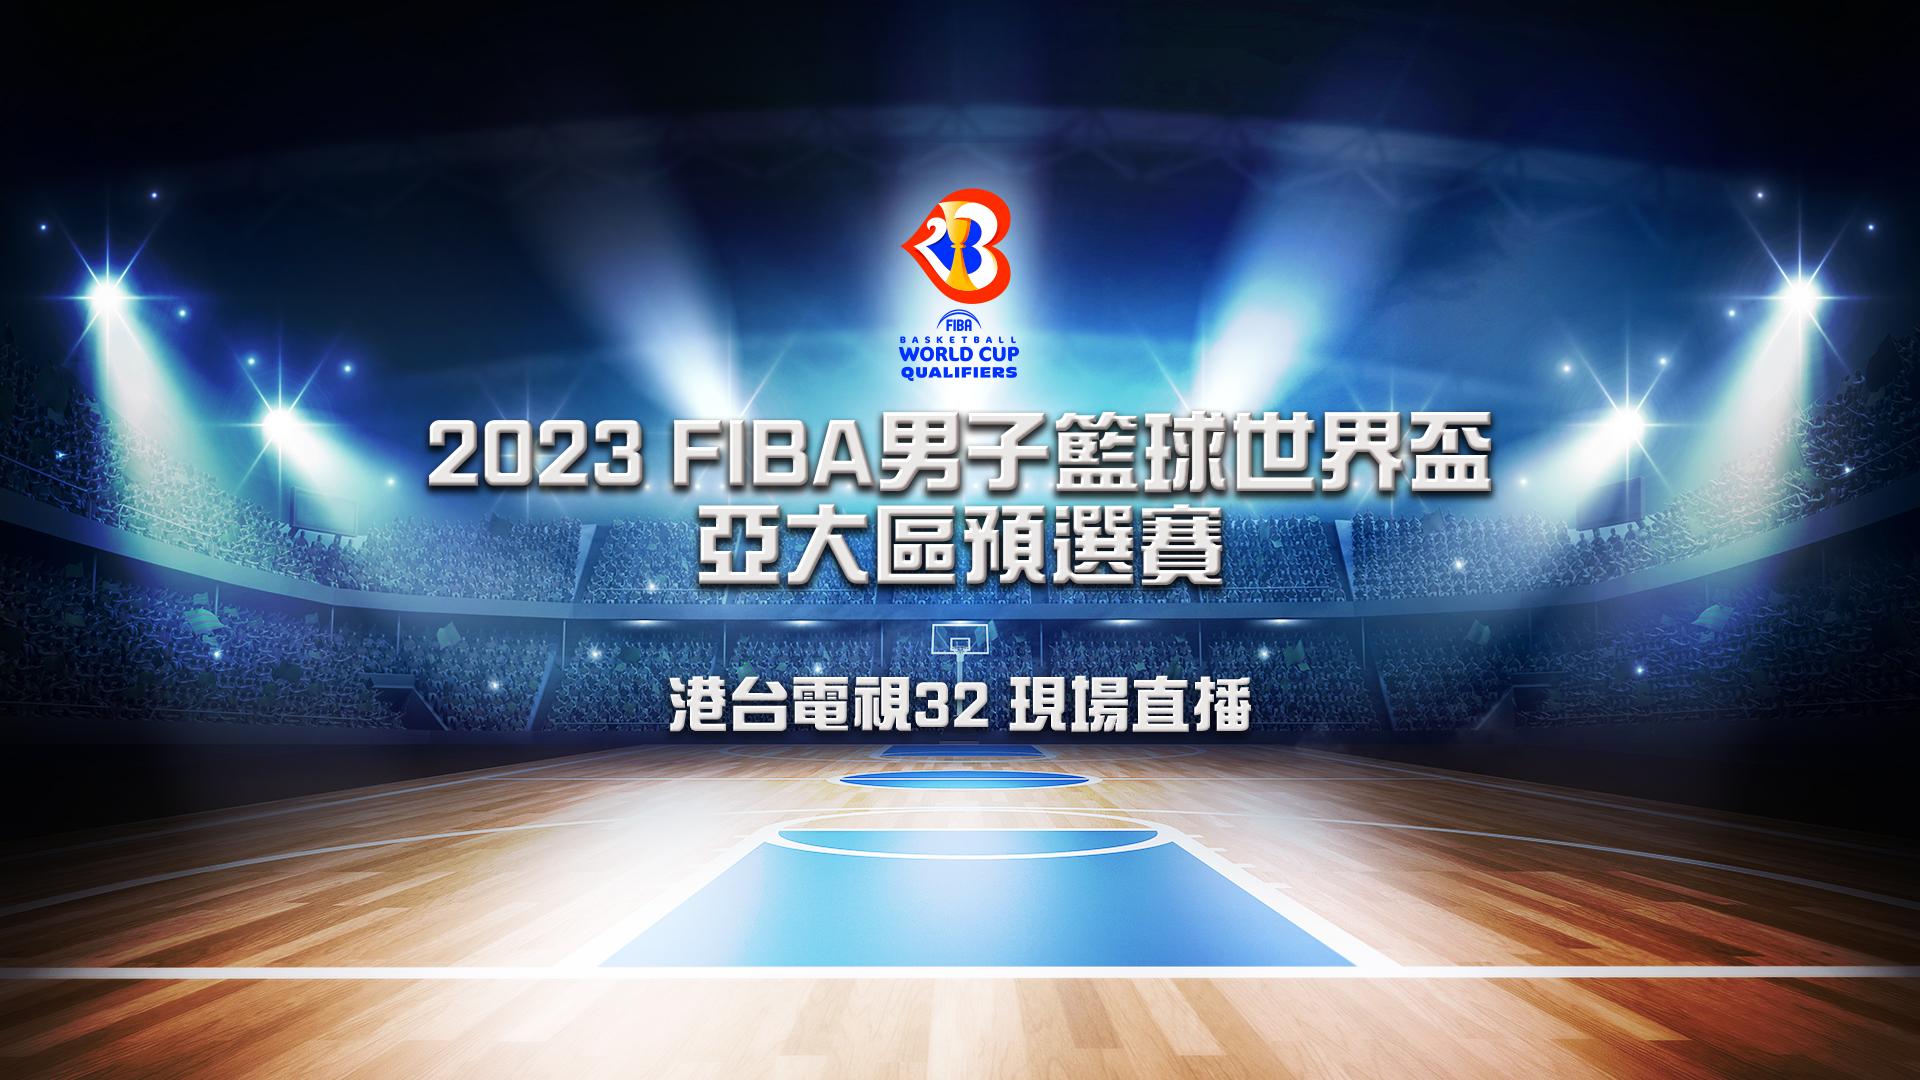 2023 FIBA男子籃球世界盃亞大區預選賽